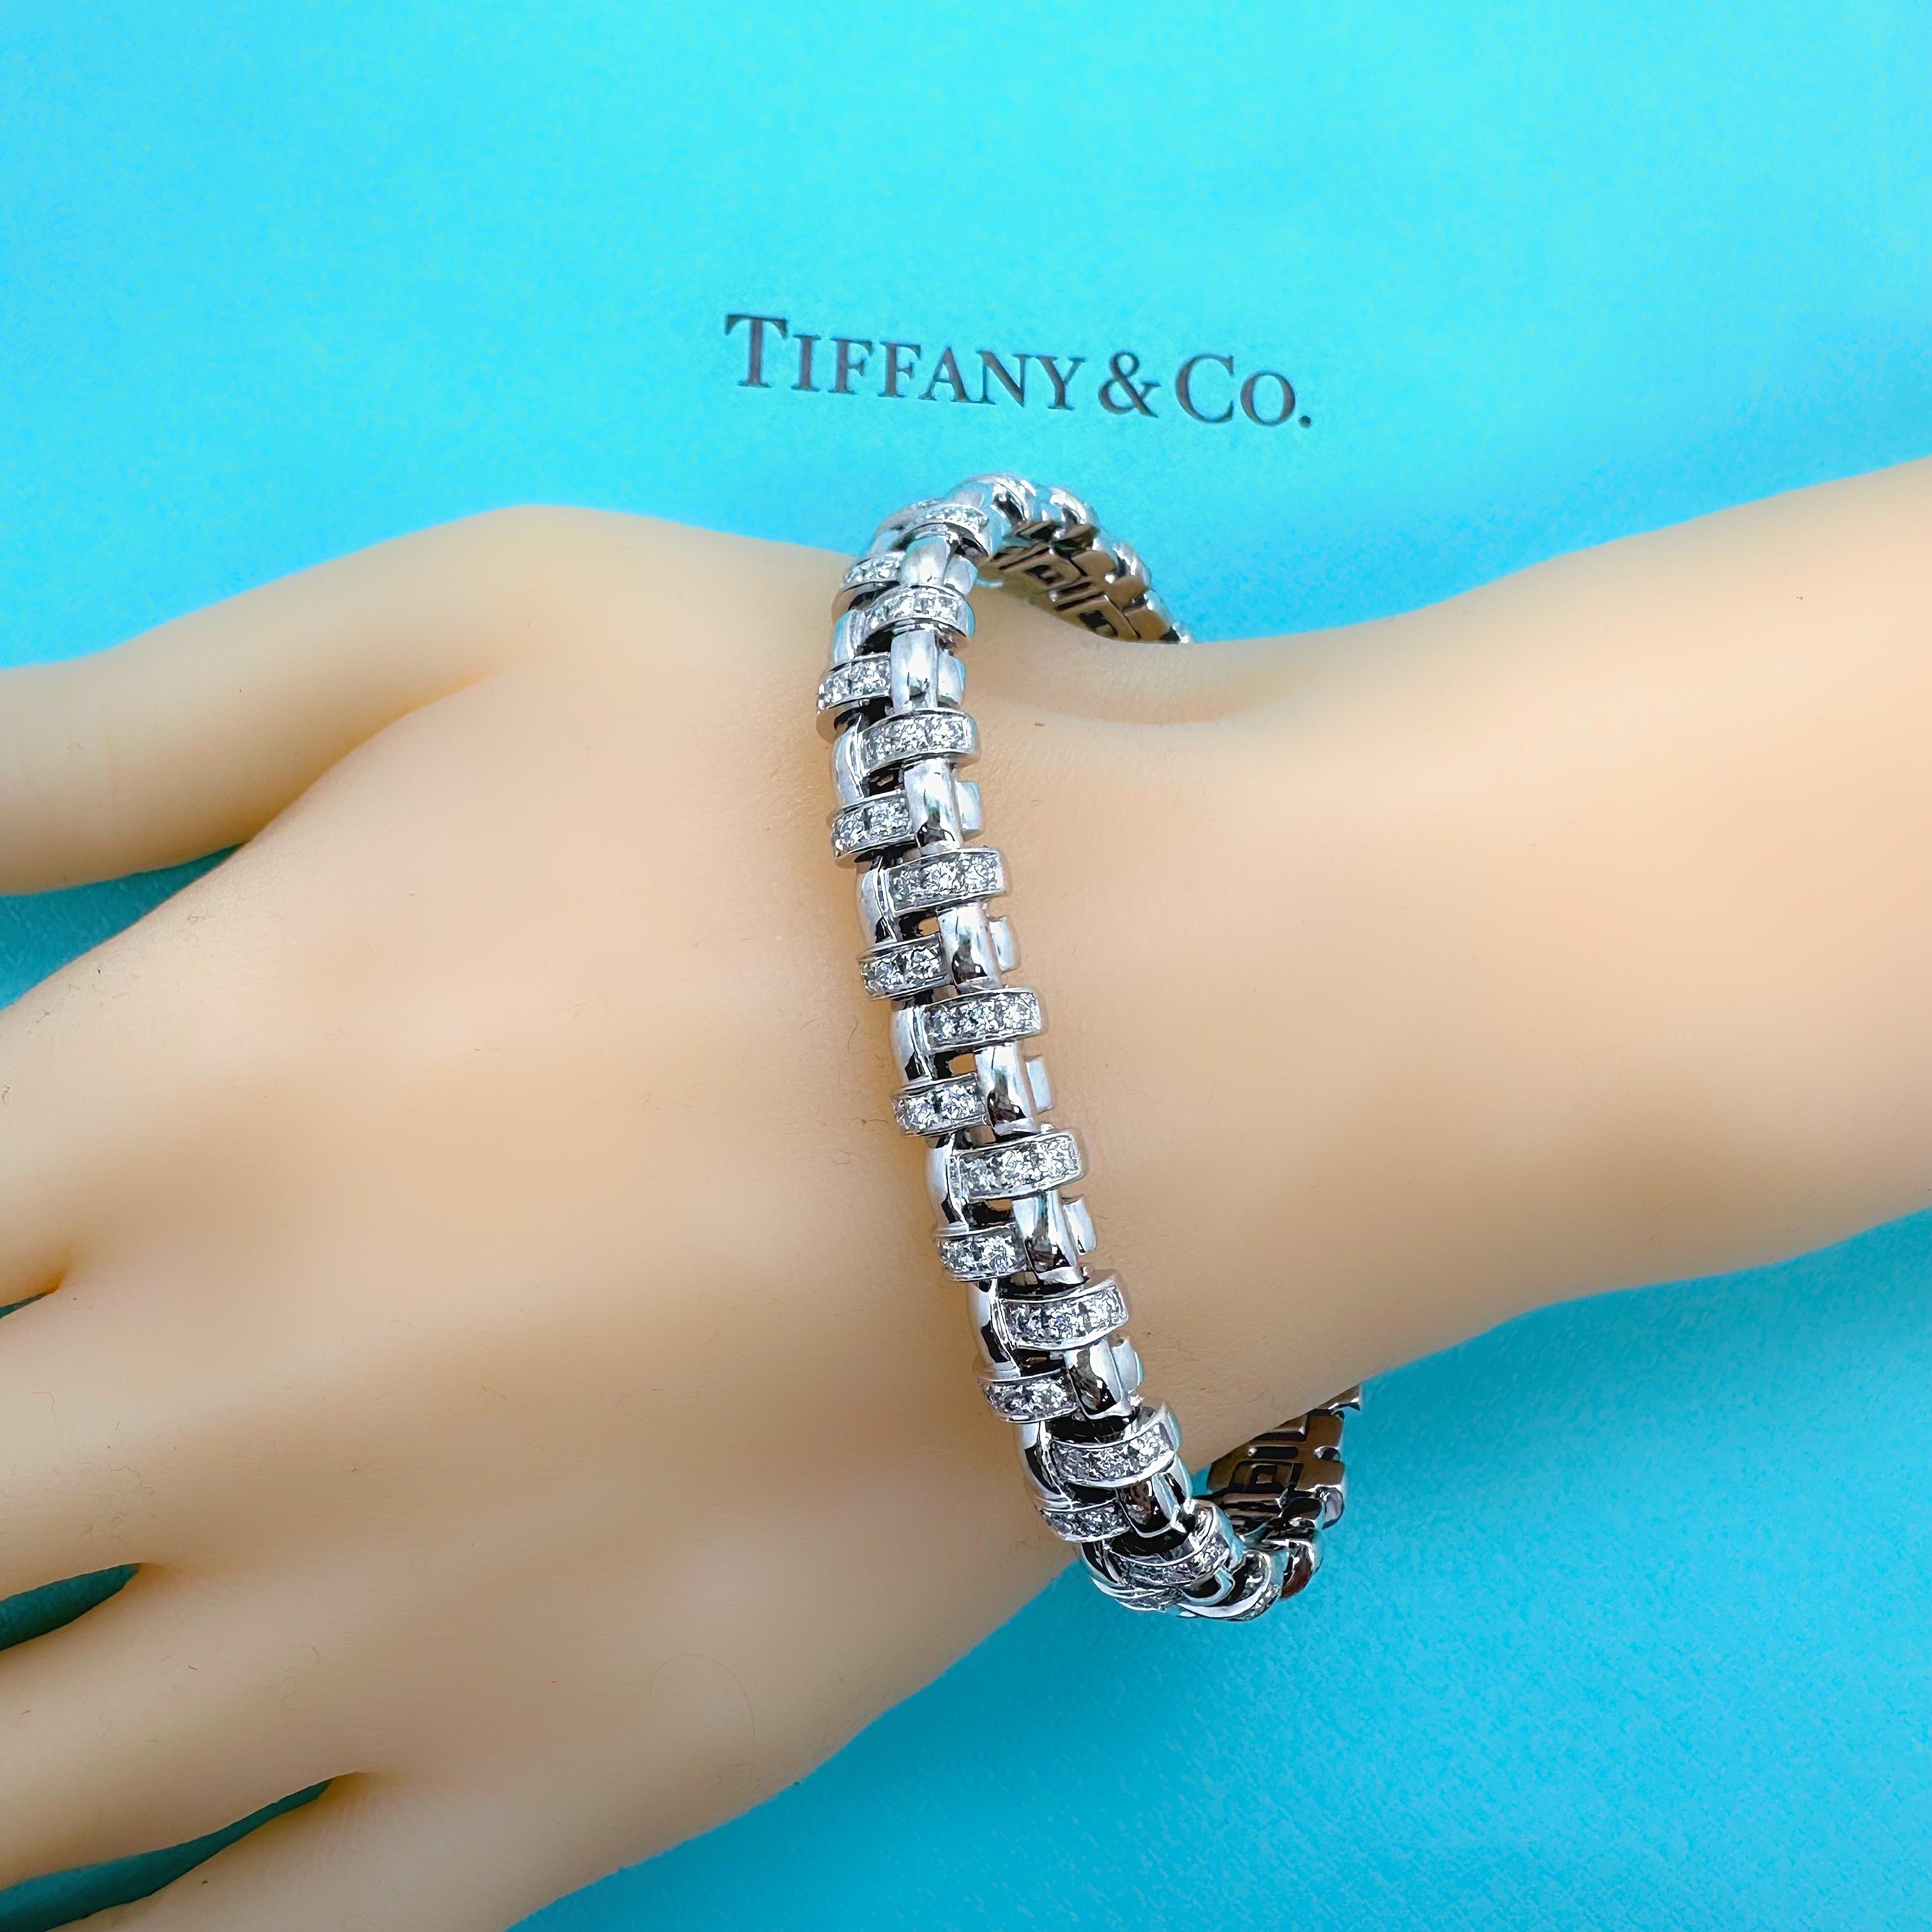 Tiffany & Co. Vannerie Basket Weave Diamond Bracelet in 18kt White Gold For Sale 4